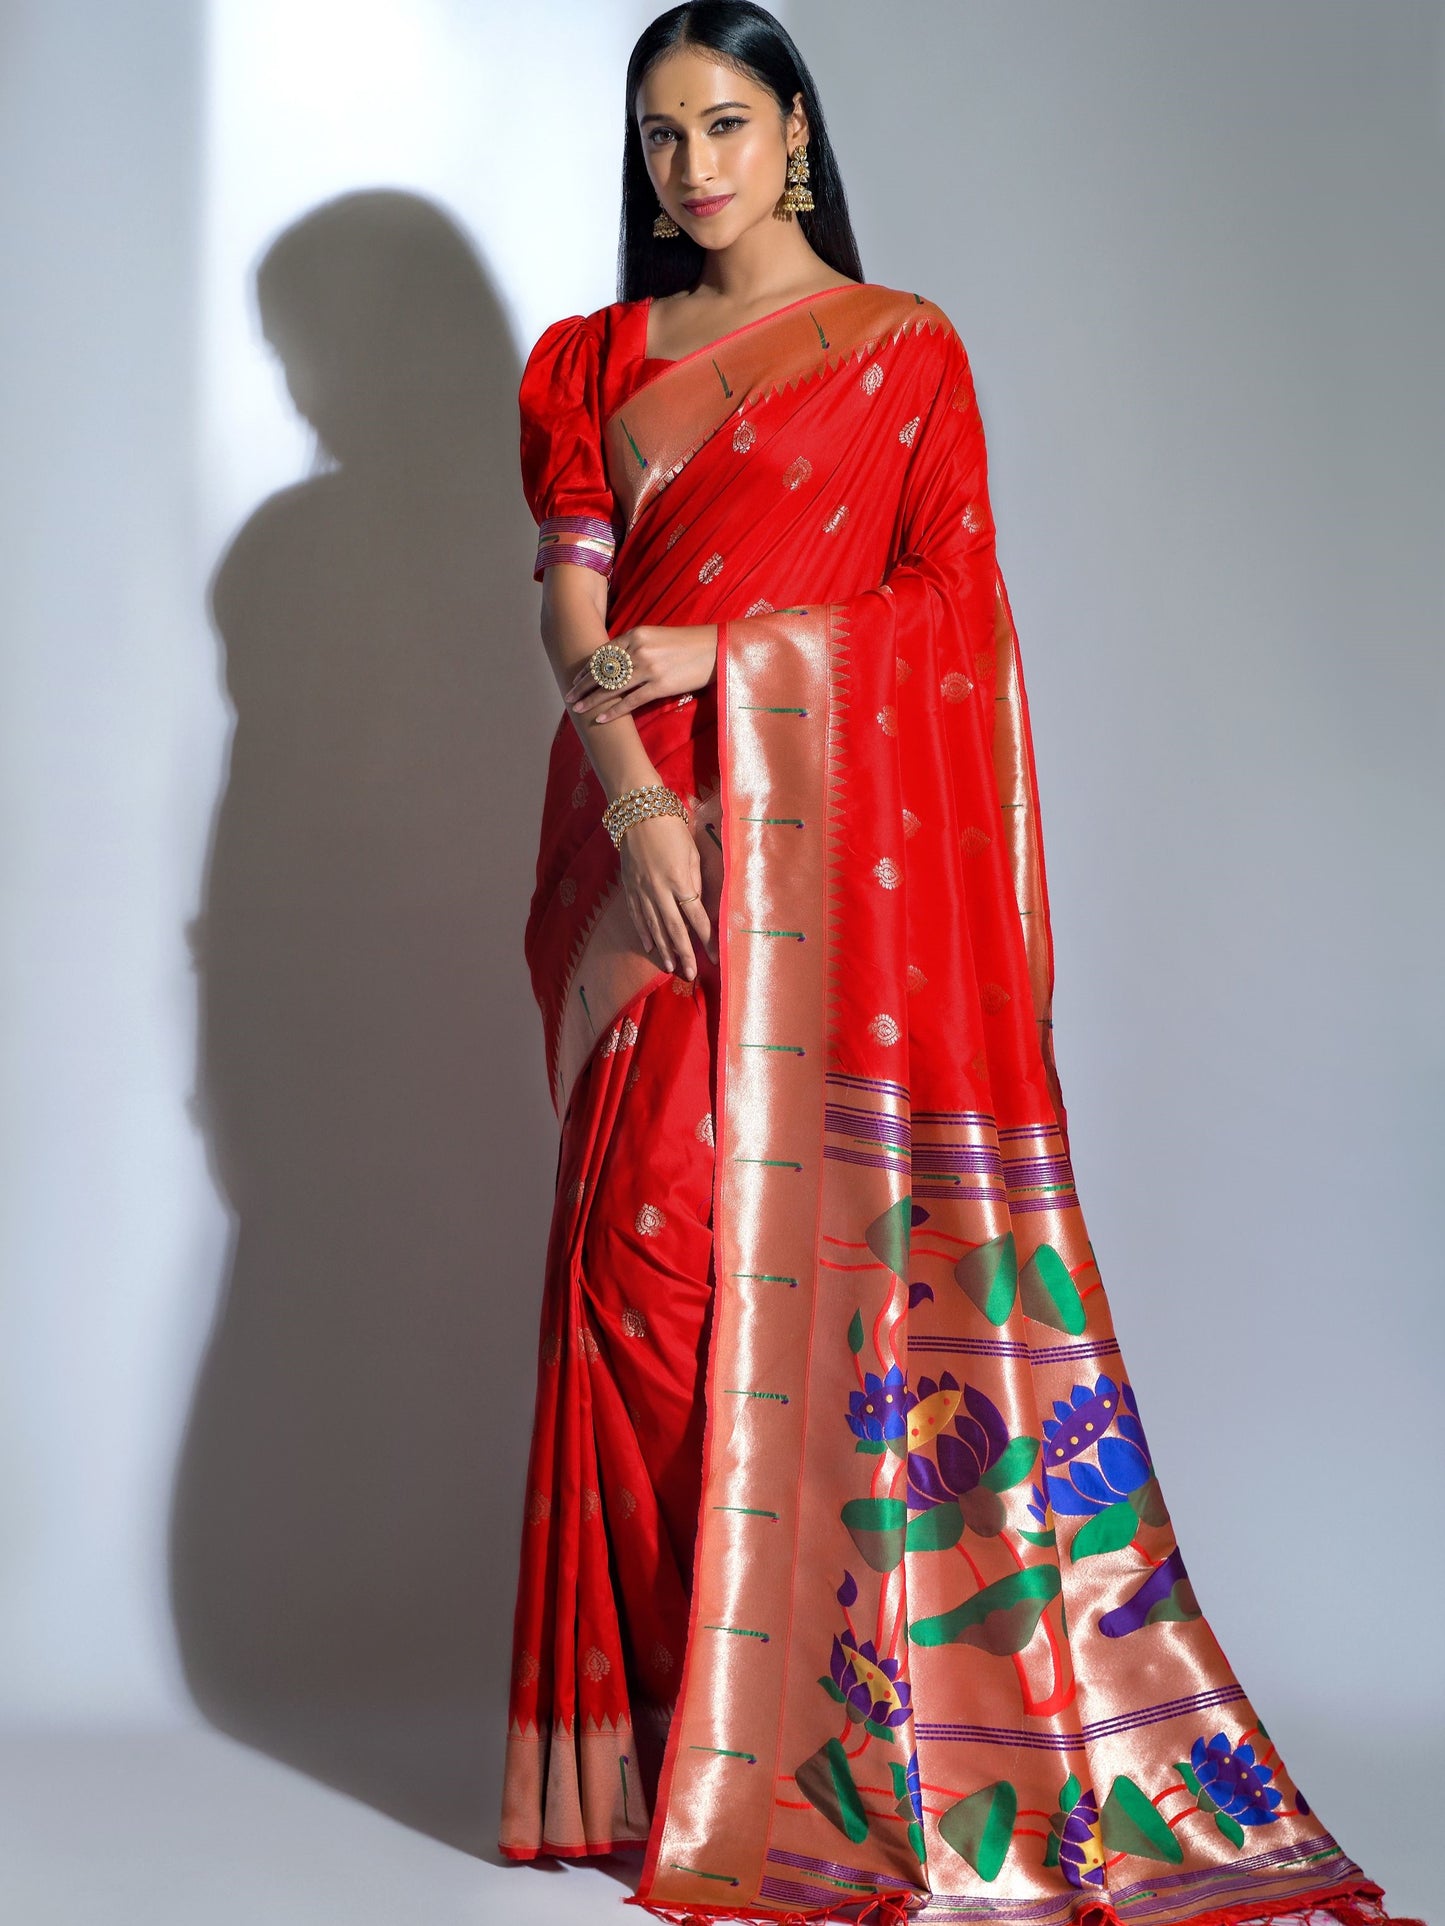 Bridal Red Paithani Saree